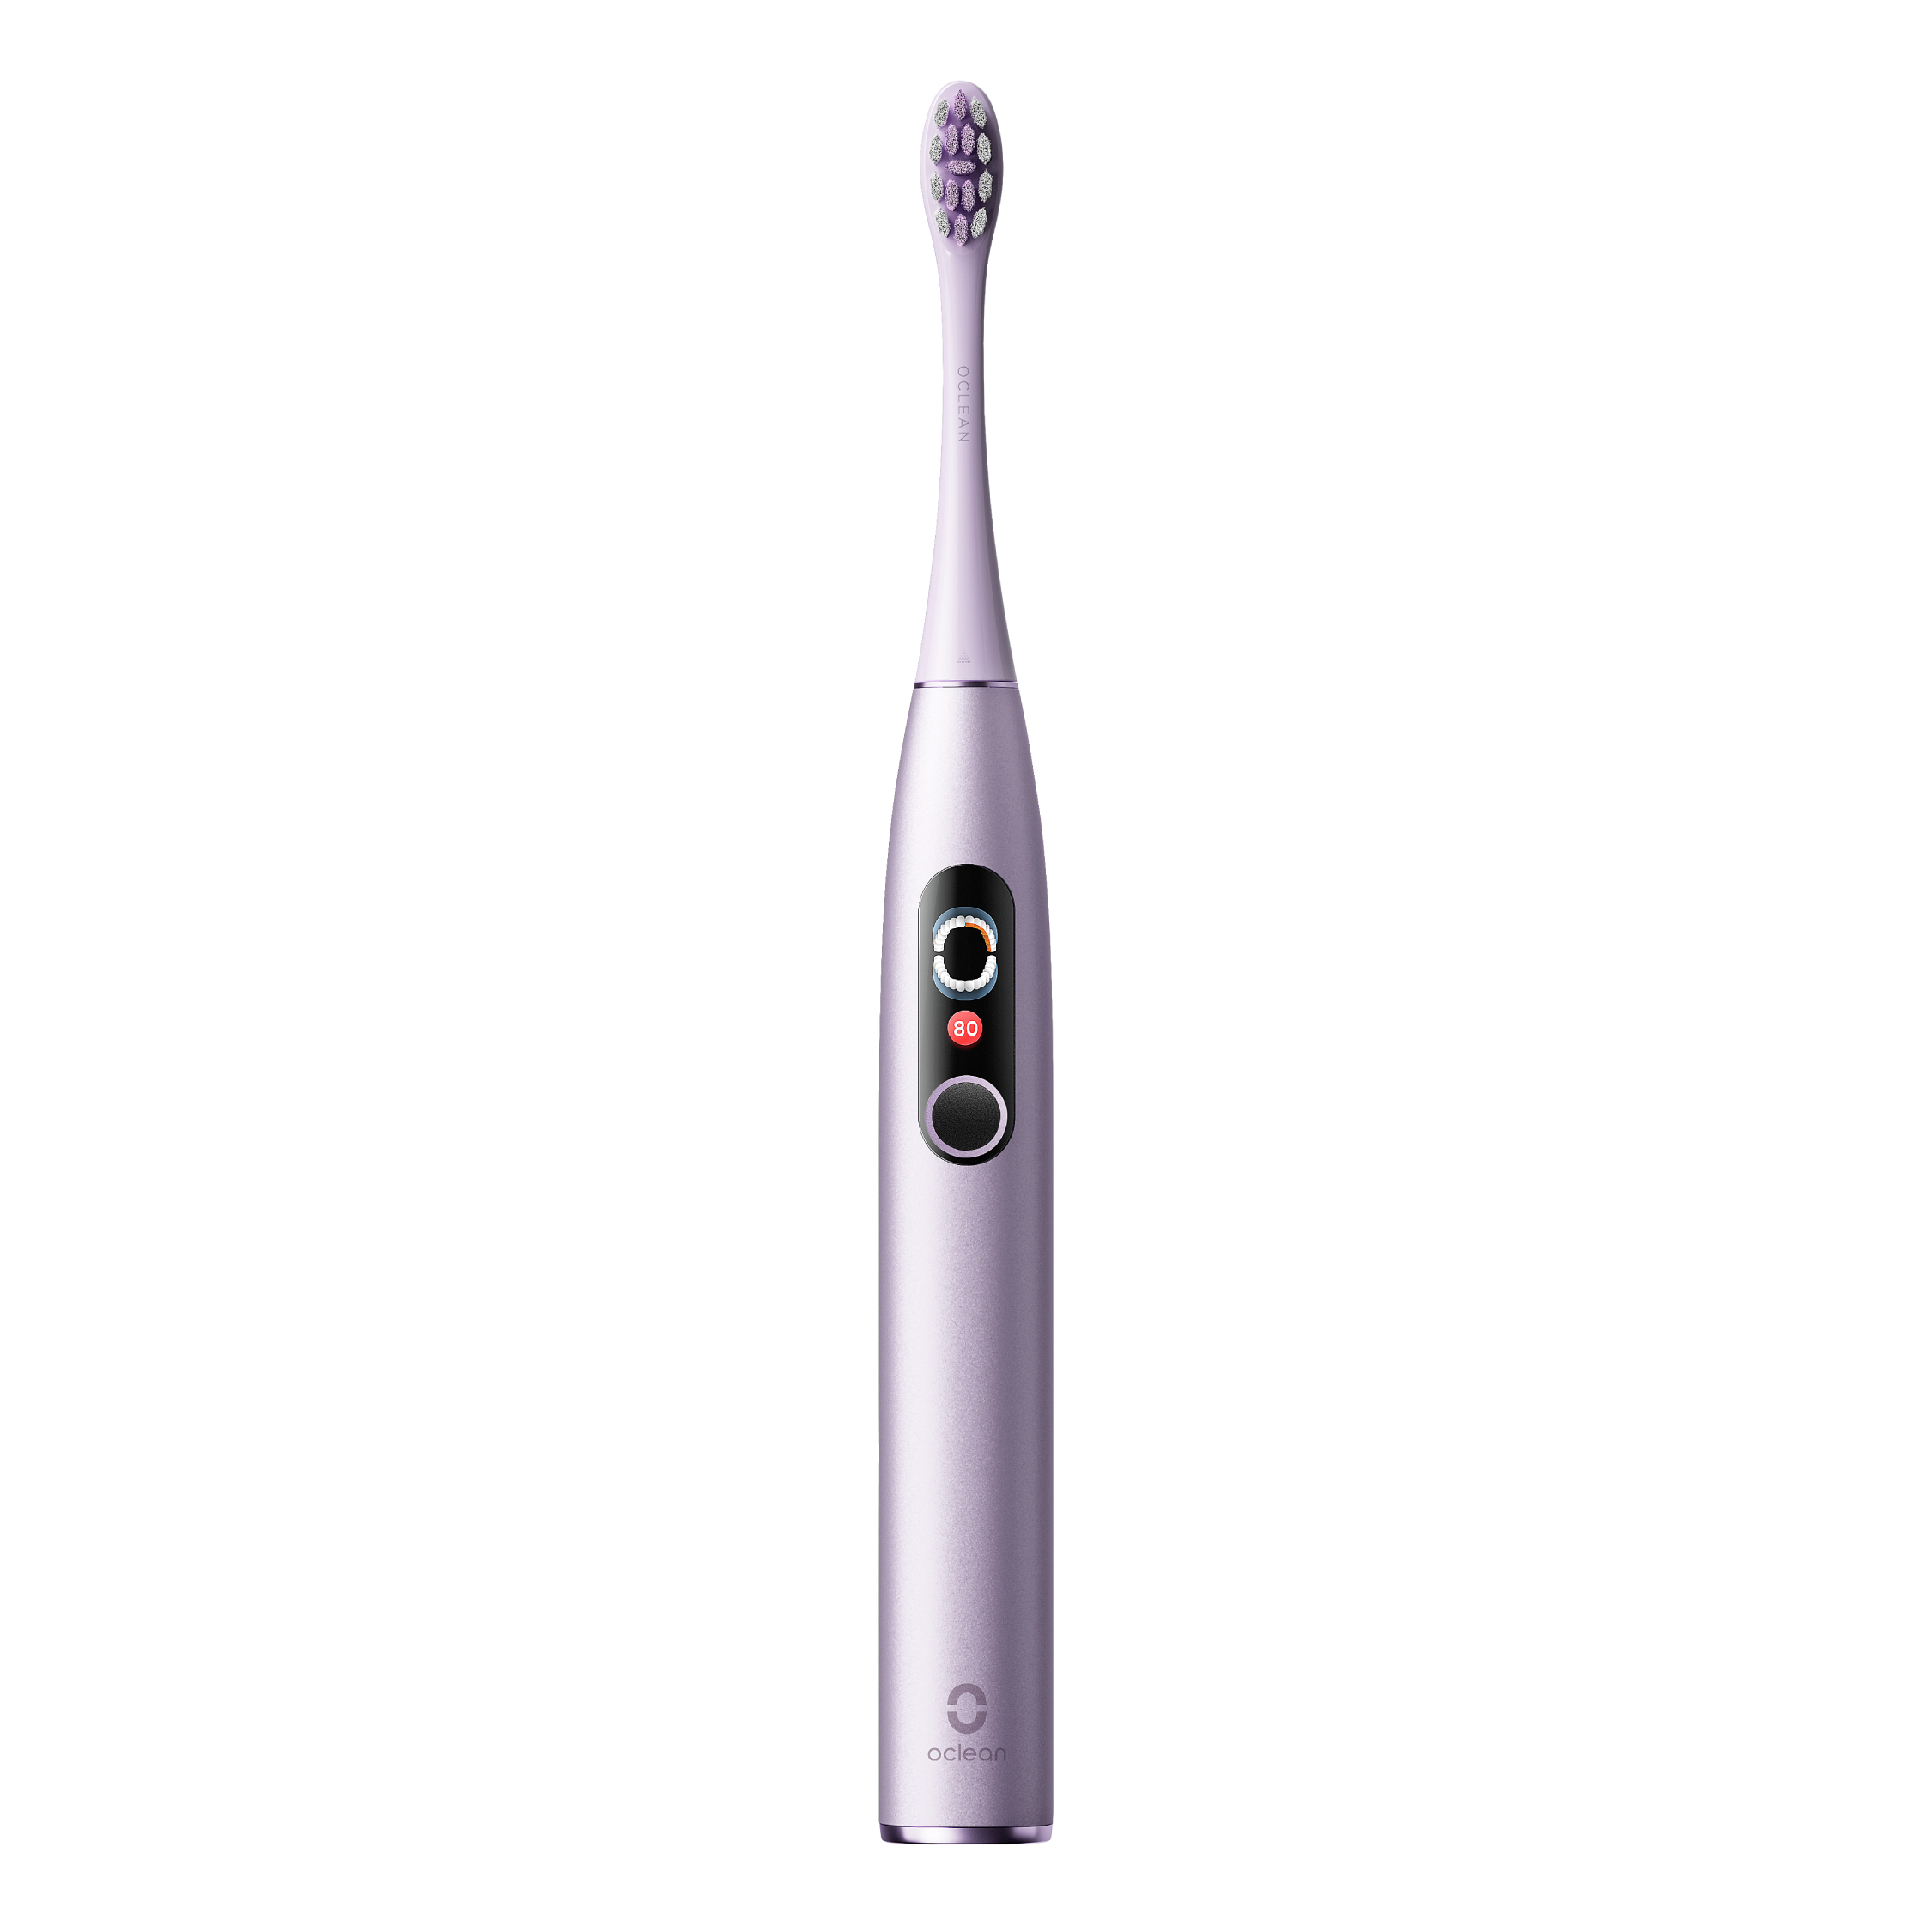 Flash Sale: Oclean X Pro Digital Electric Sonic Toothbrush